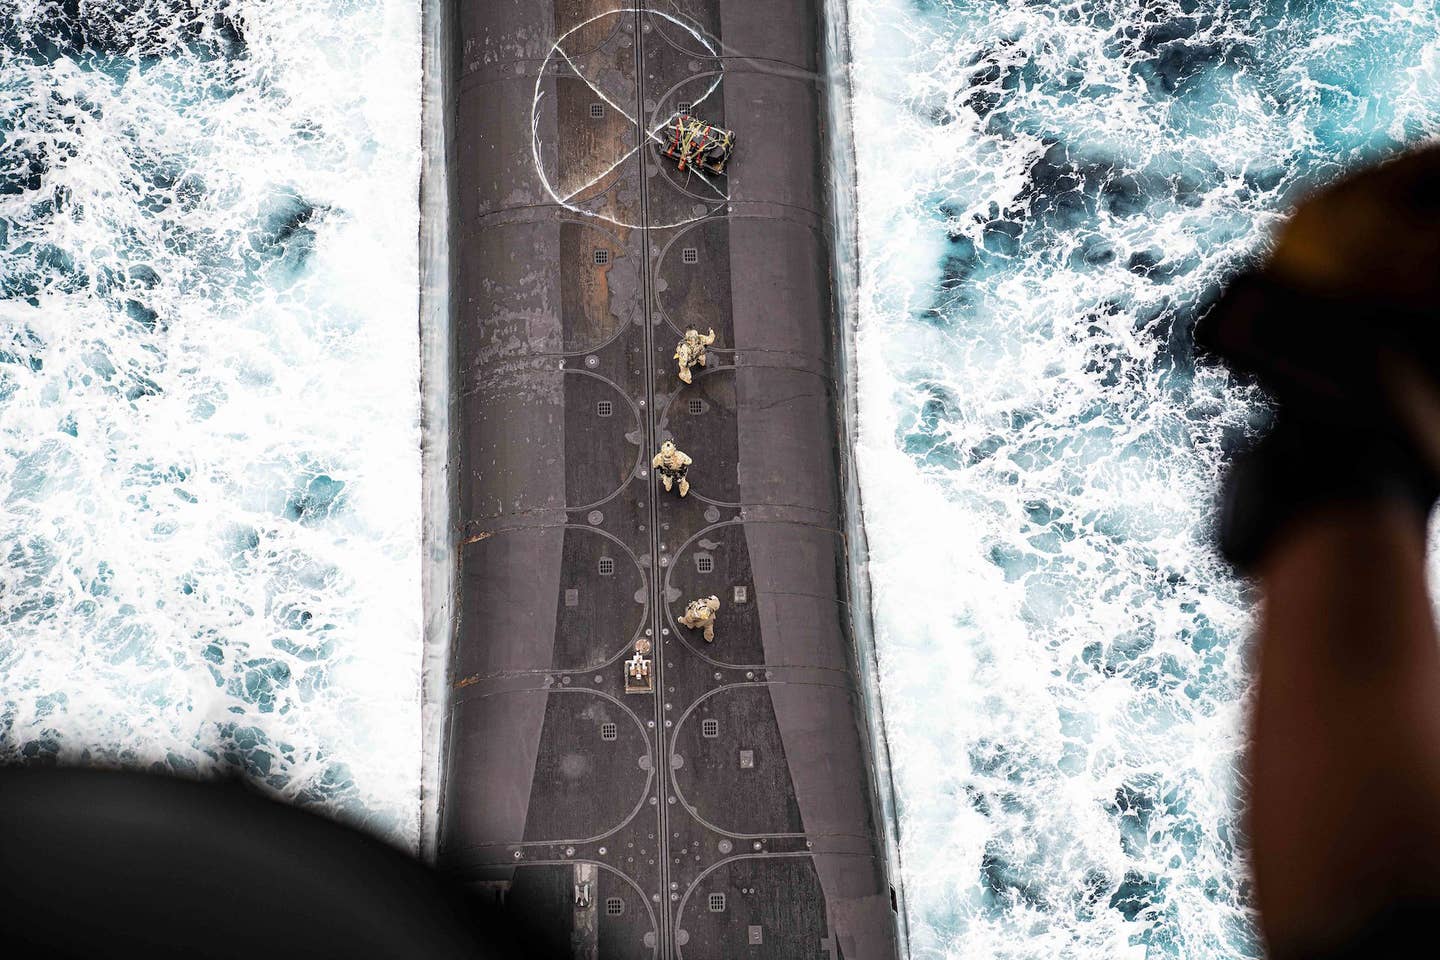 Another view above USS <em>Florida. U.S. Air Force photo by Tech Sgt. Westin Warburton</em>